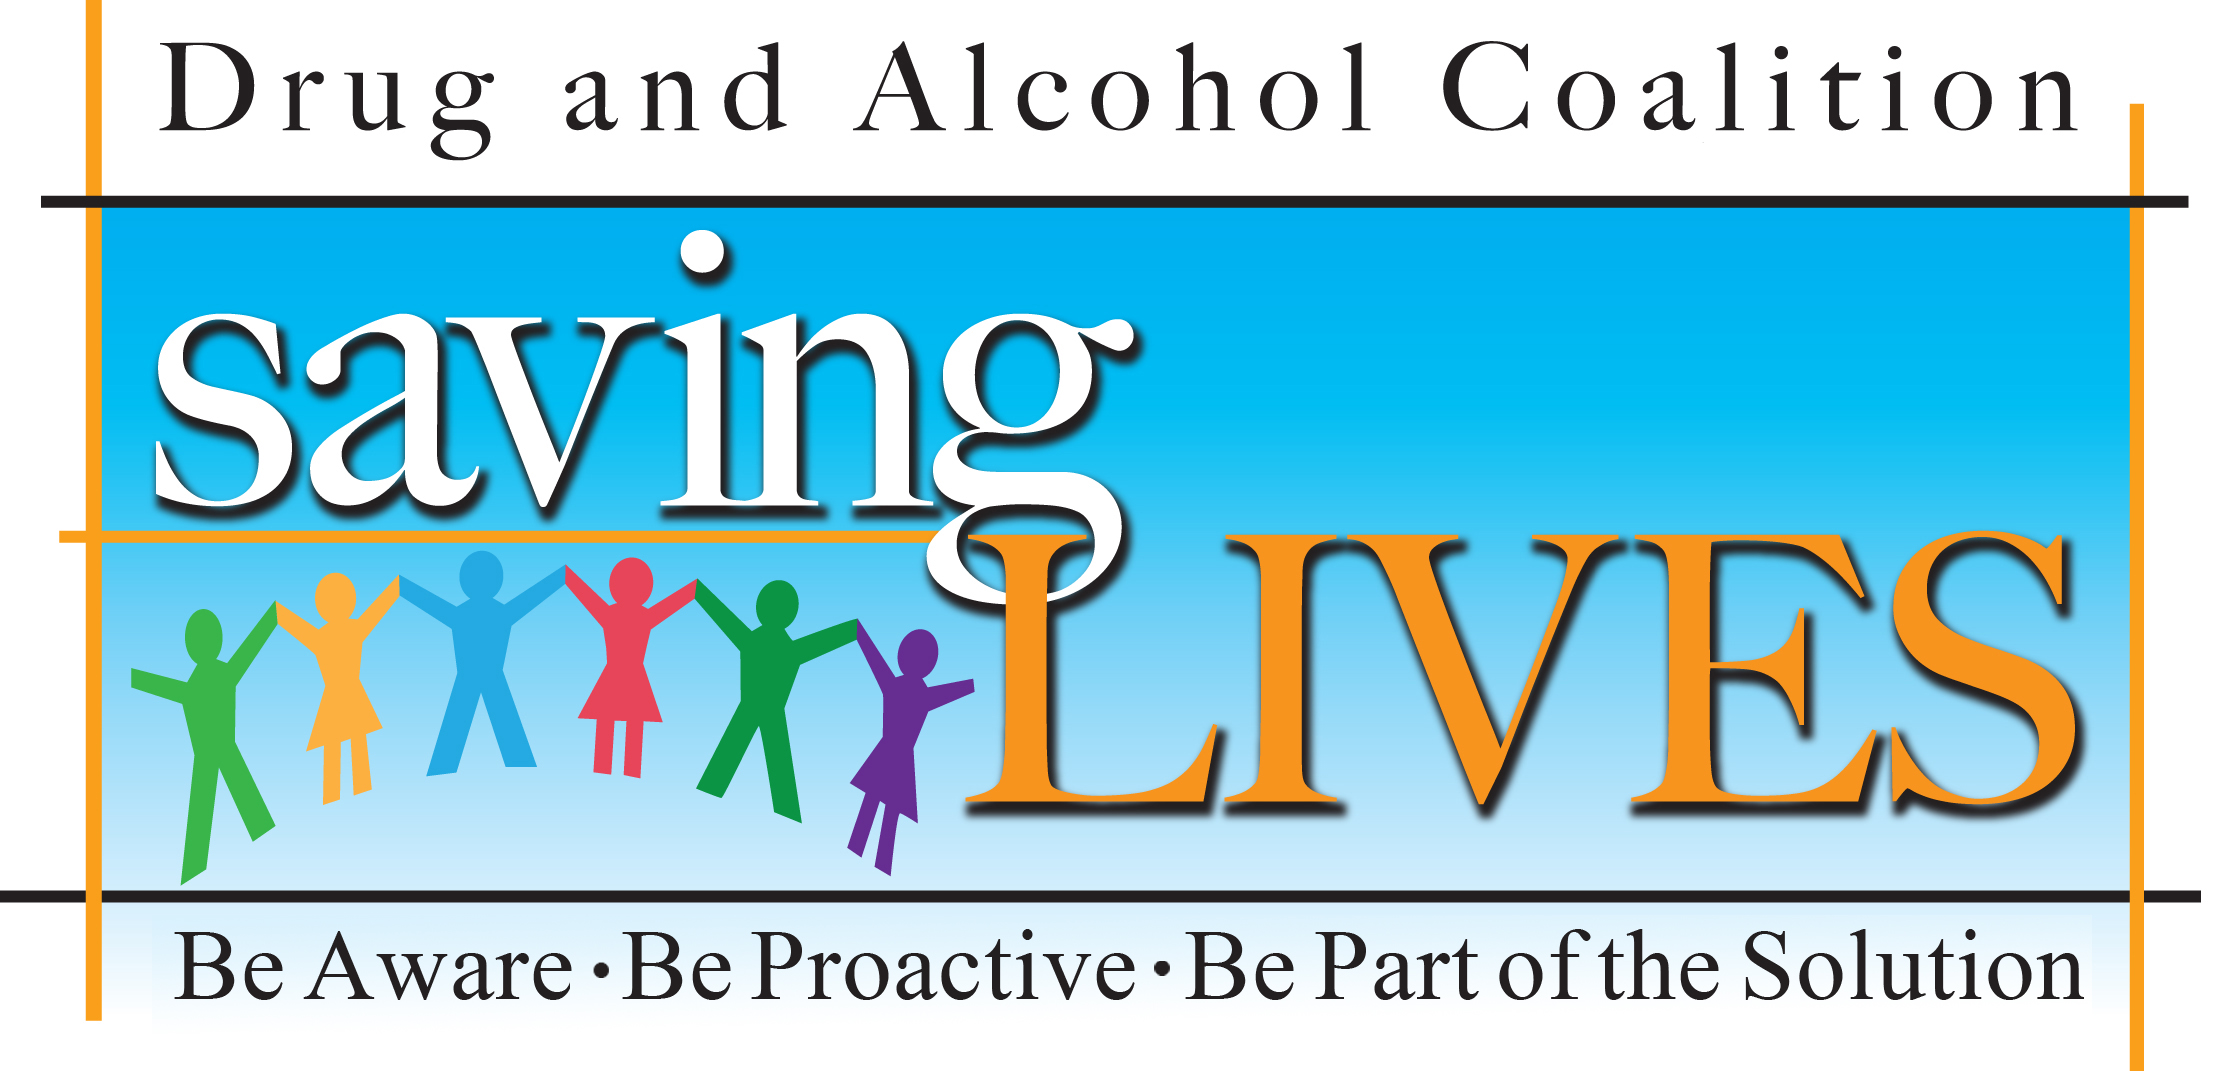 The Saving Lives Drug and Alcohol Coalition